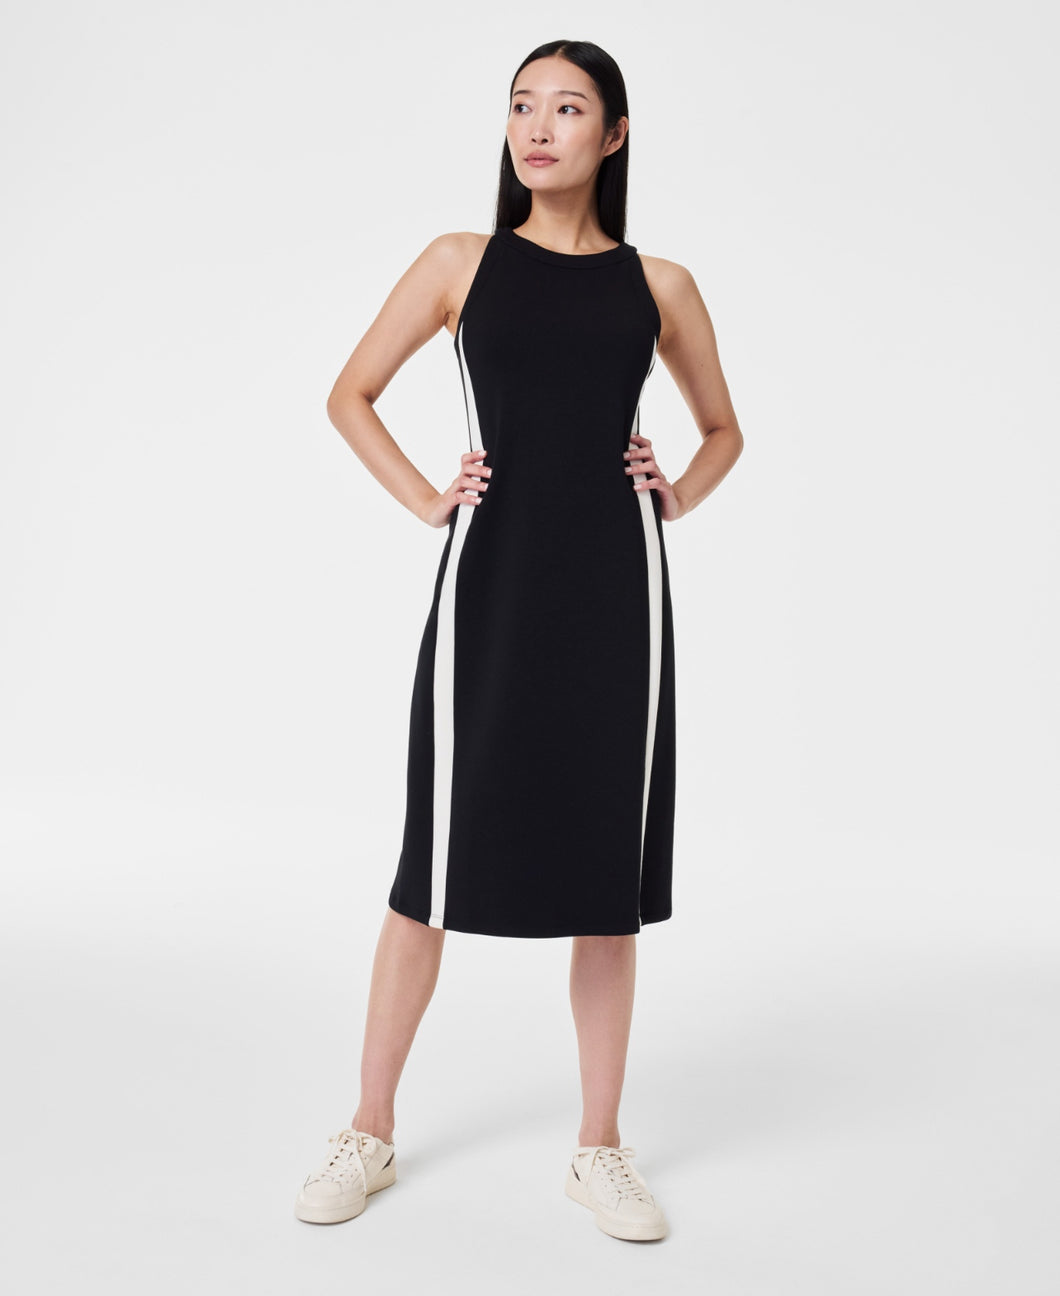 Spanx: AirEssentials Side Stripe Midi Dress in Very Black